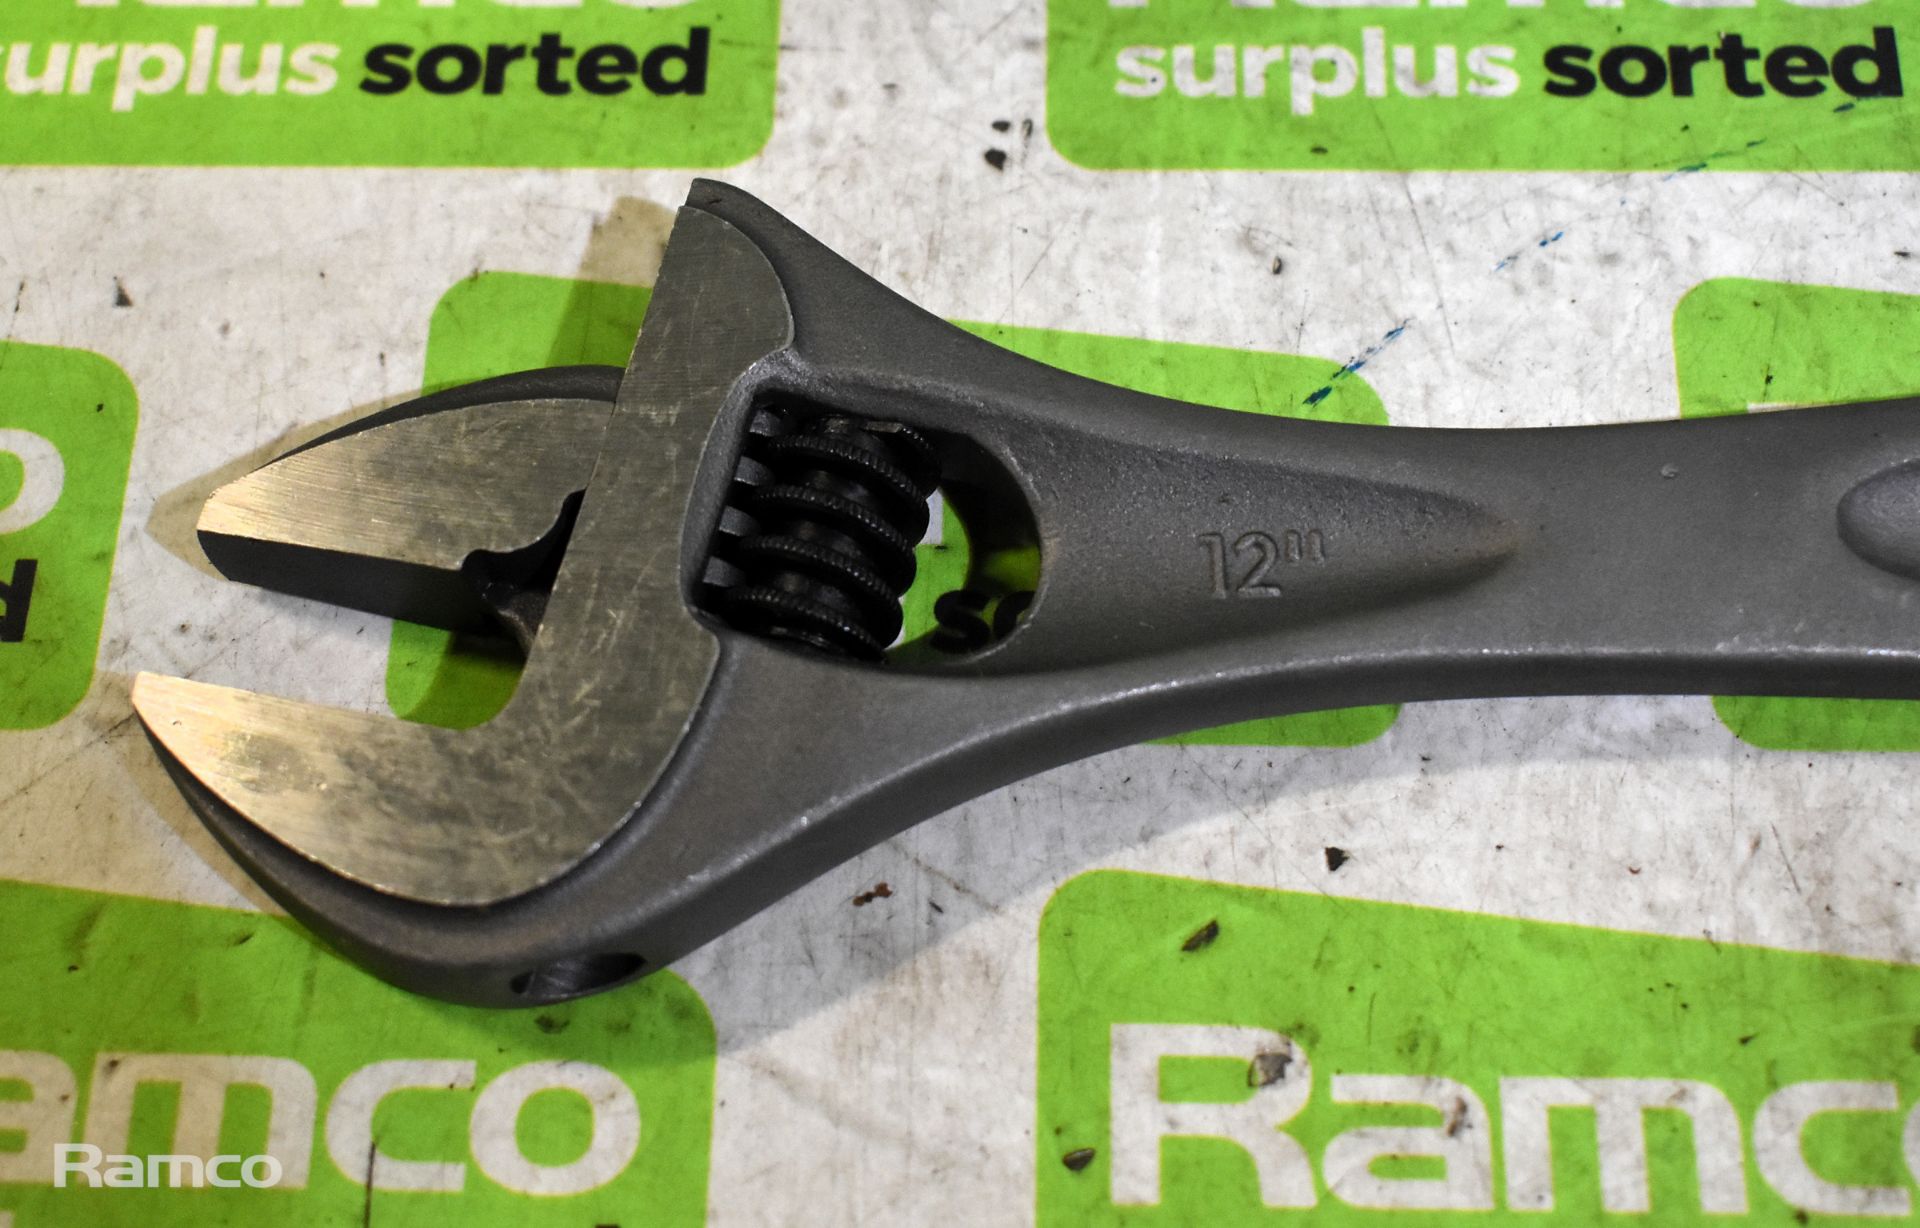 3x Sturtevant Richmont LTC - 2 torque wrench handles with narrow 3/8 ratchet head - 17 - 85 Nm, - Image 5 of 6